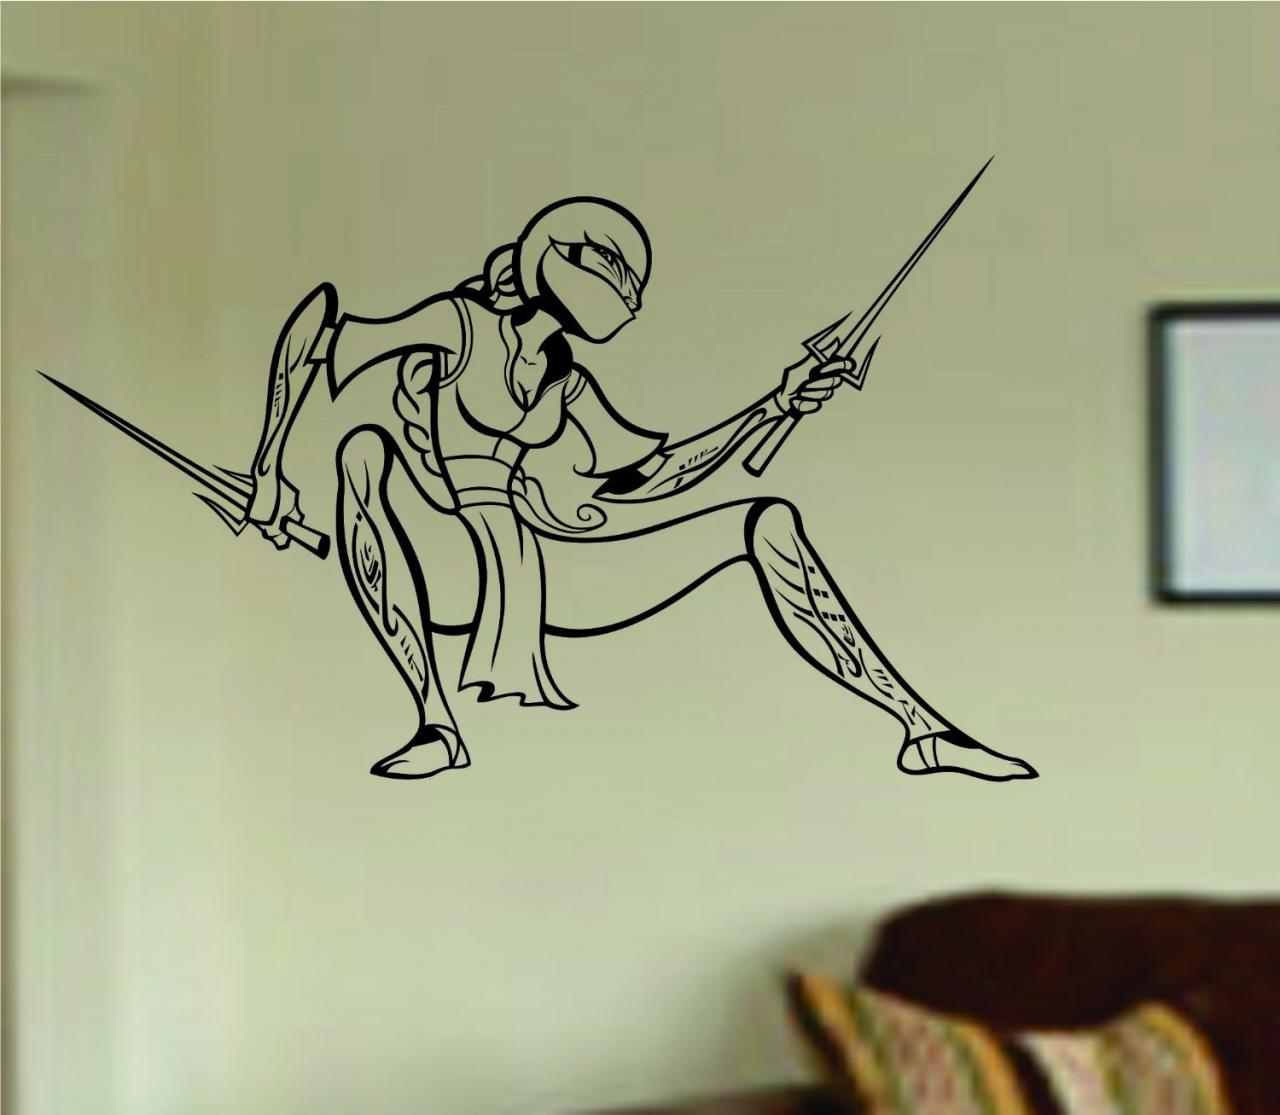 Ninja Wall Decal Sticker Mural Art Graphic Dragon Kid Boy Room Asian